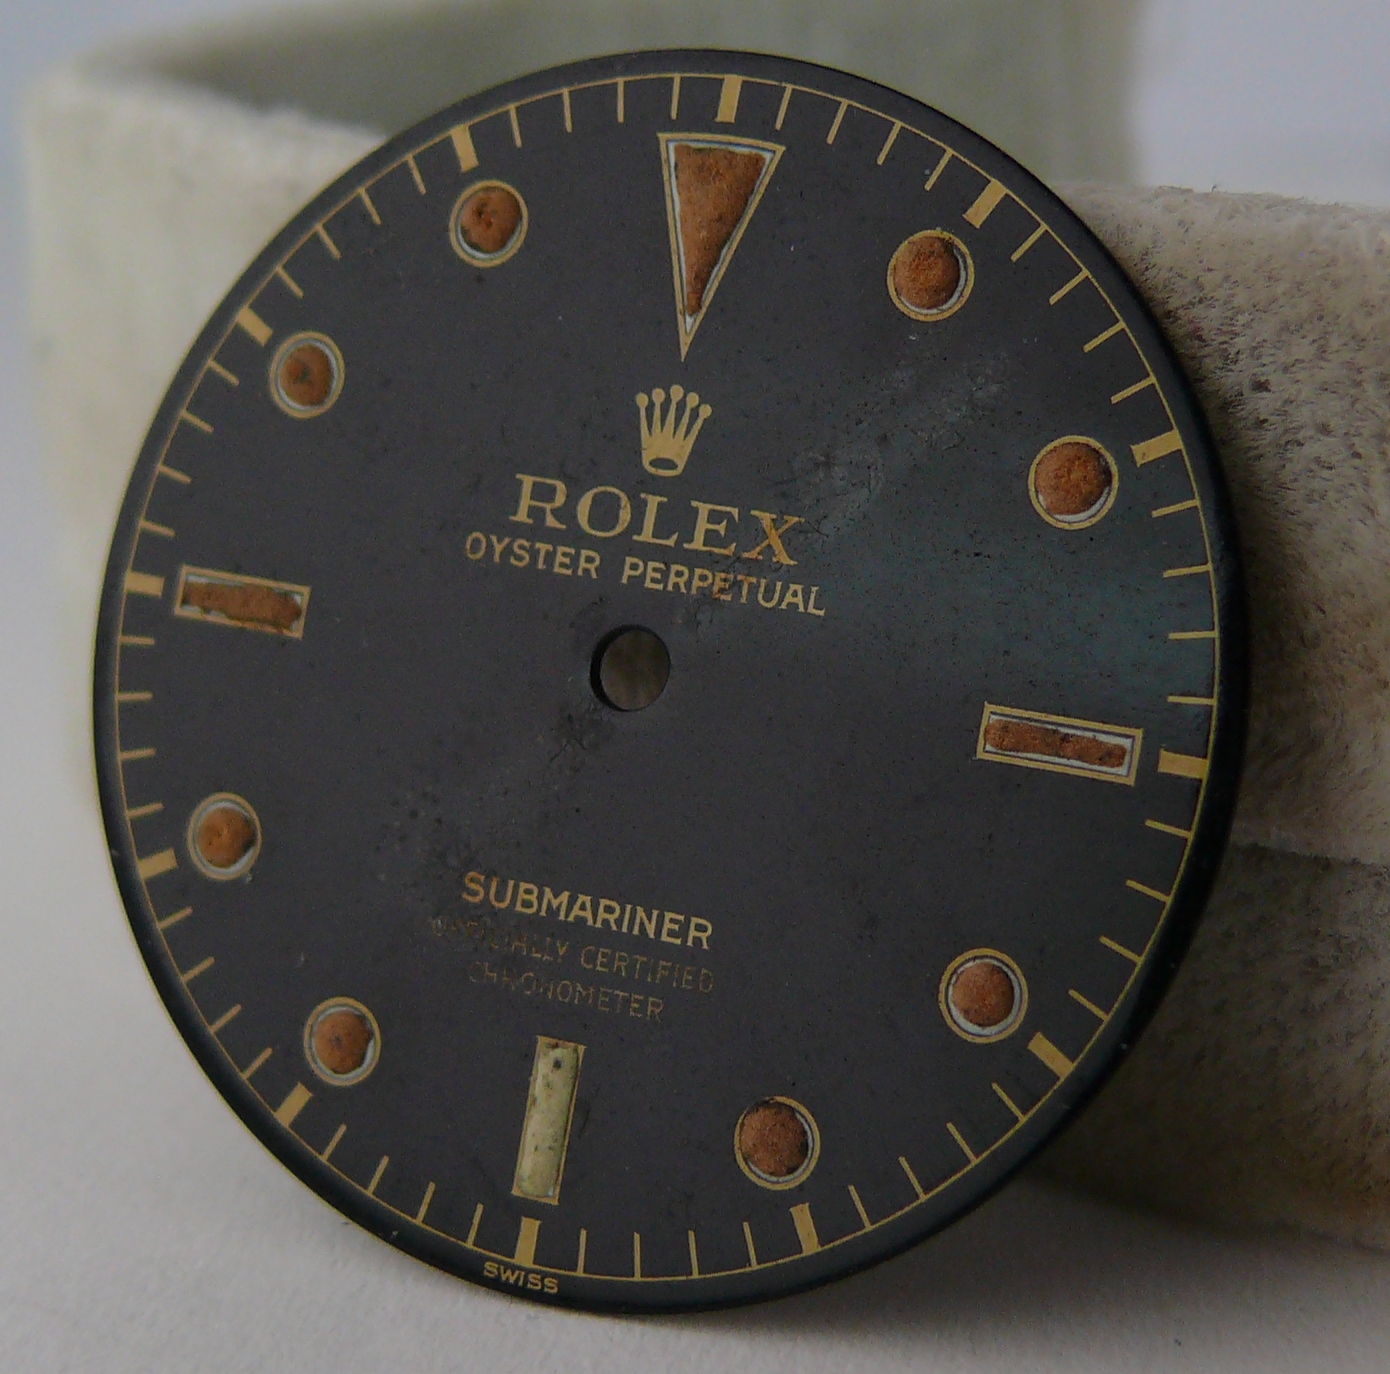 Vintage Rolex 5508 James Bond Submariner Dial circa 1950s - Image 4 of 12